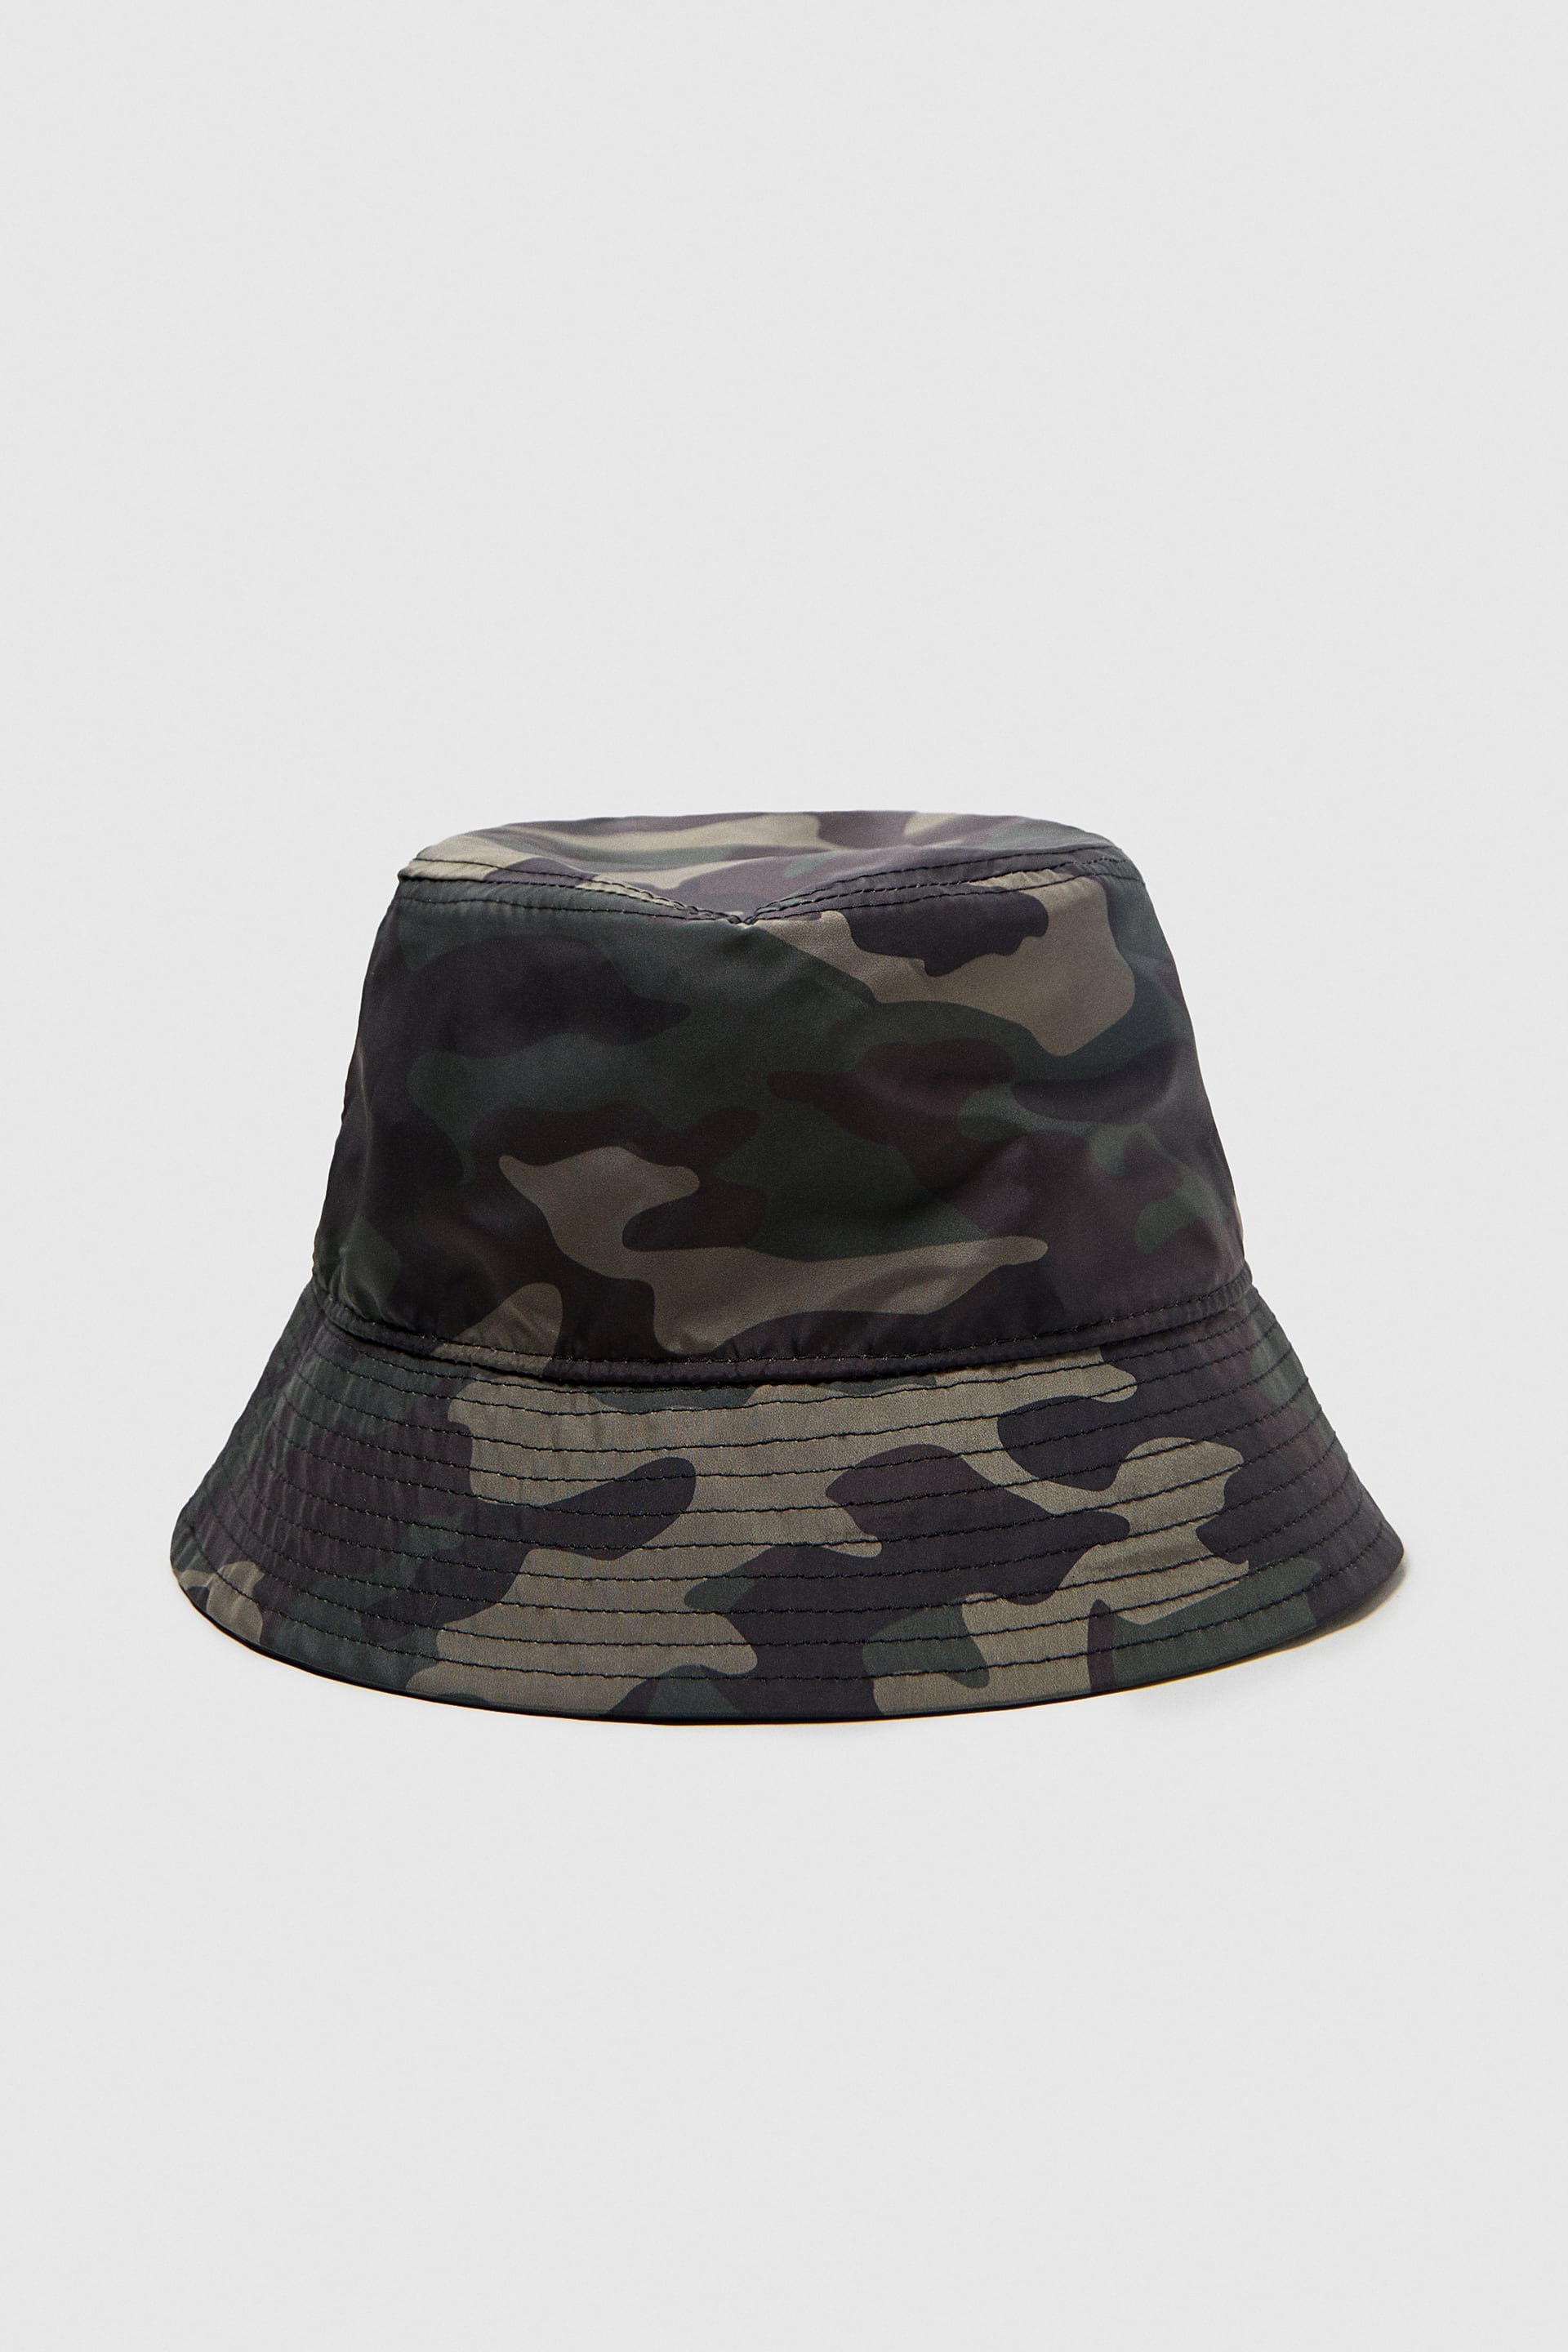 Zara bucket hat